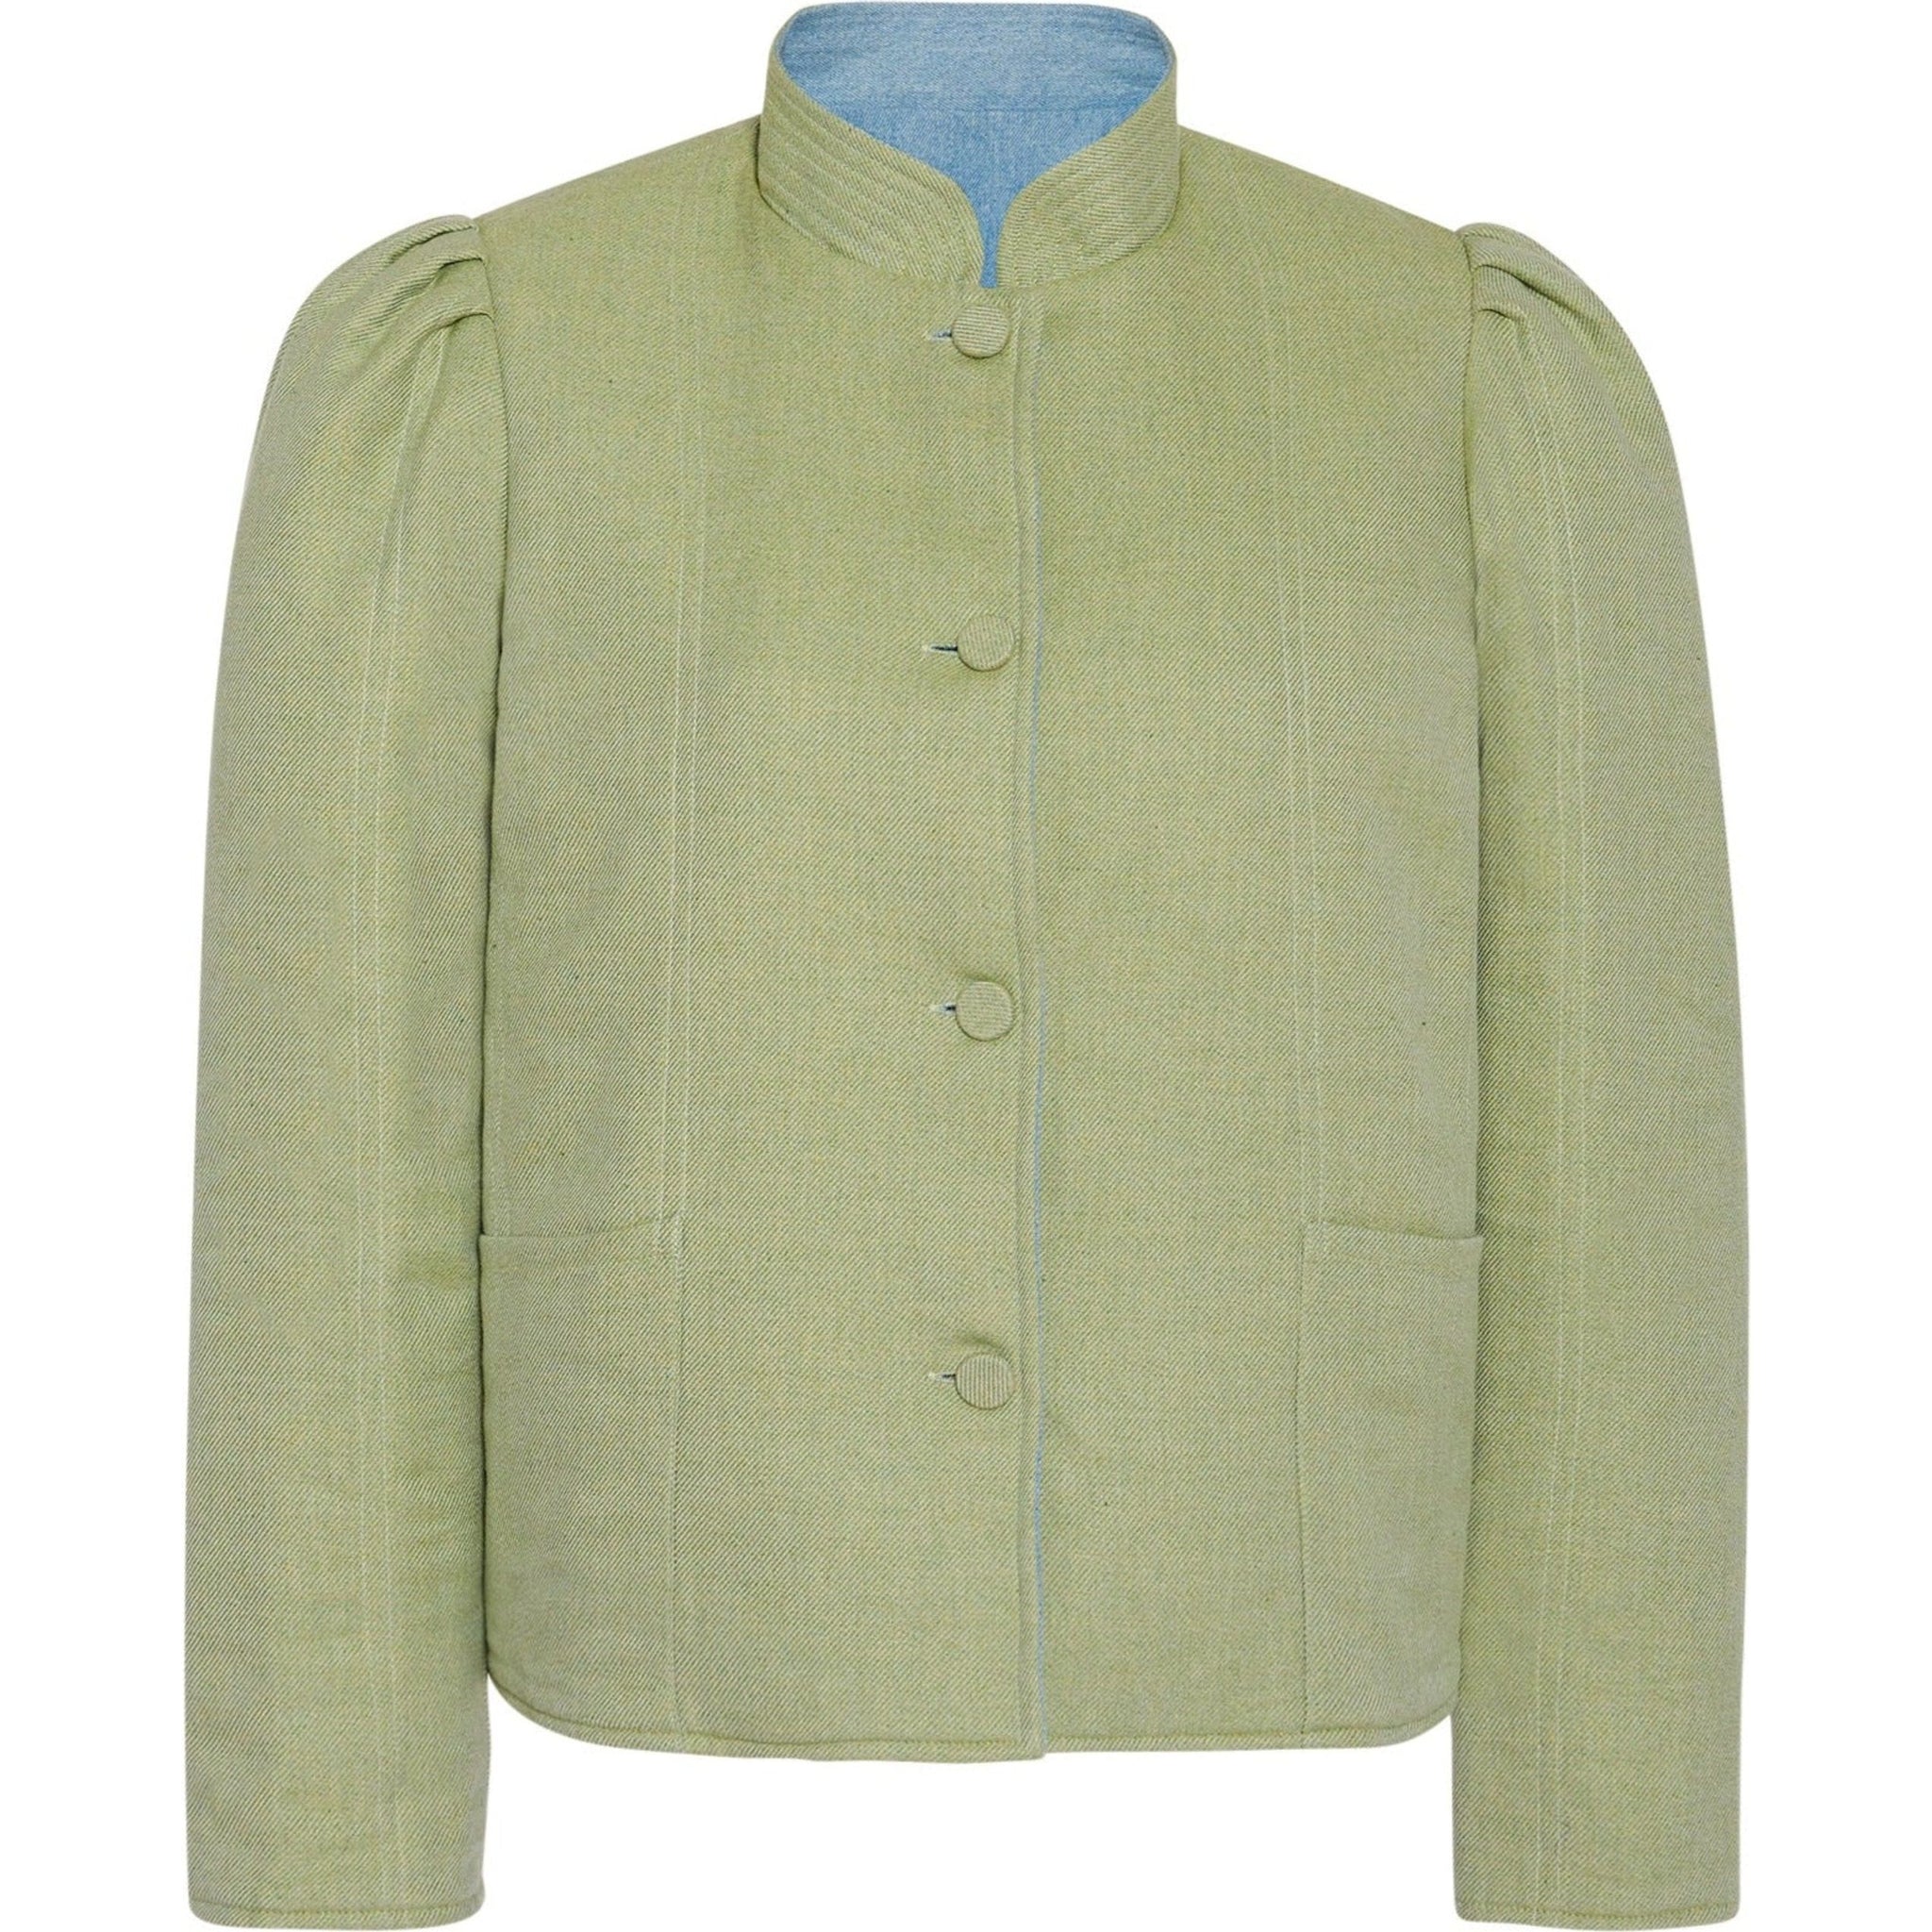 Women's Magic Jacket in Denim & Key Lime Cashmere